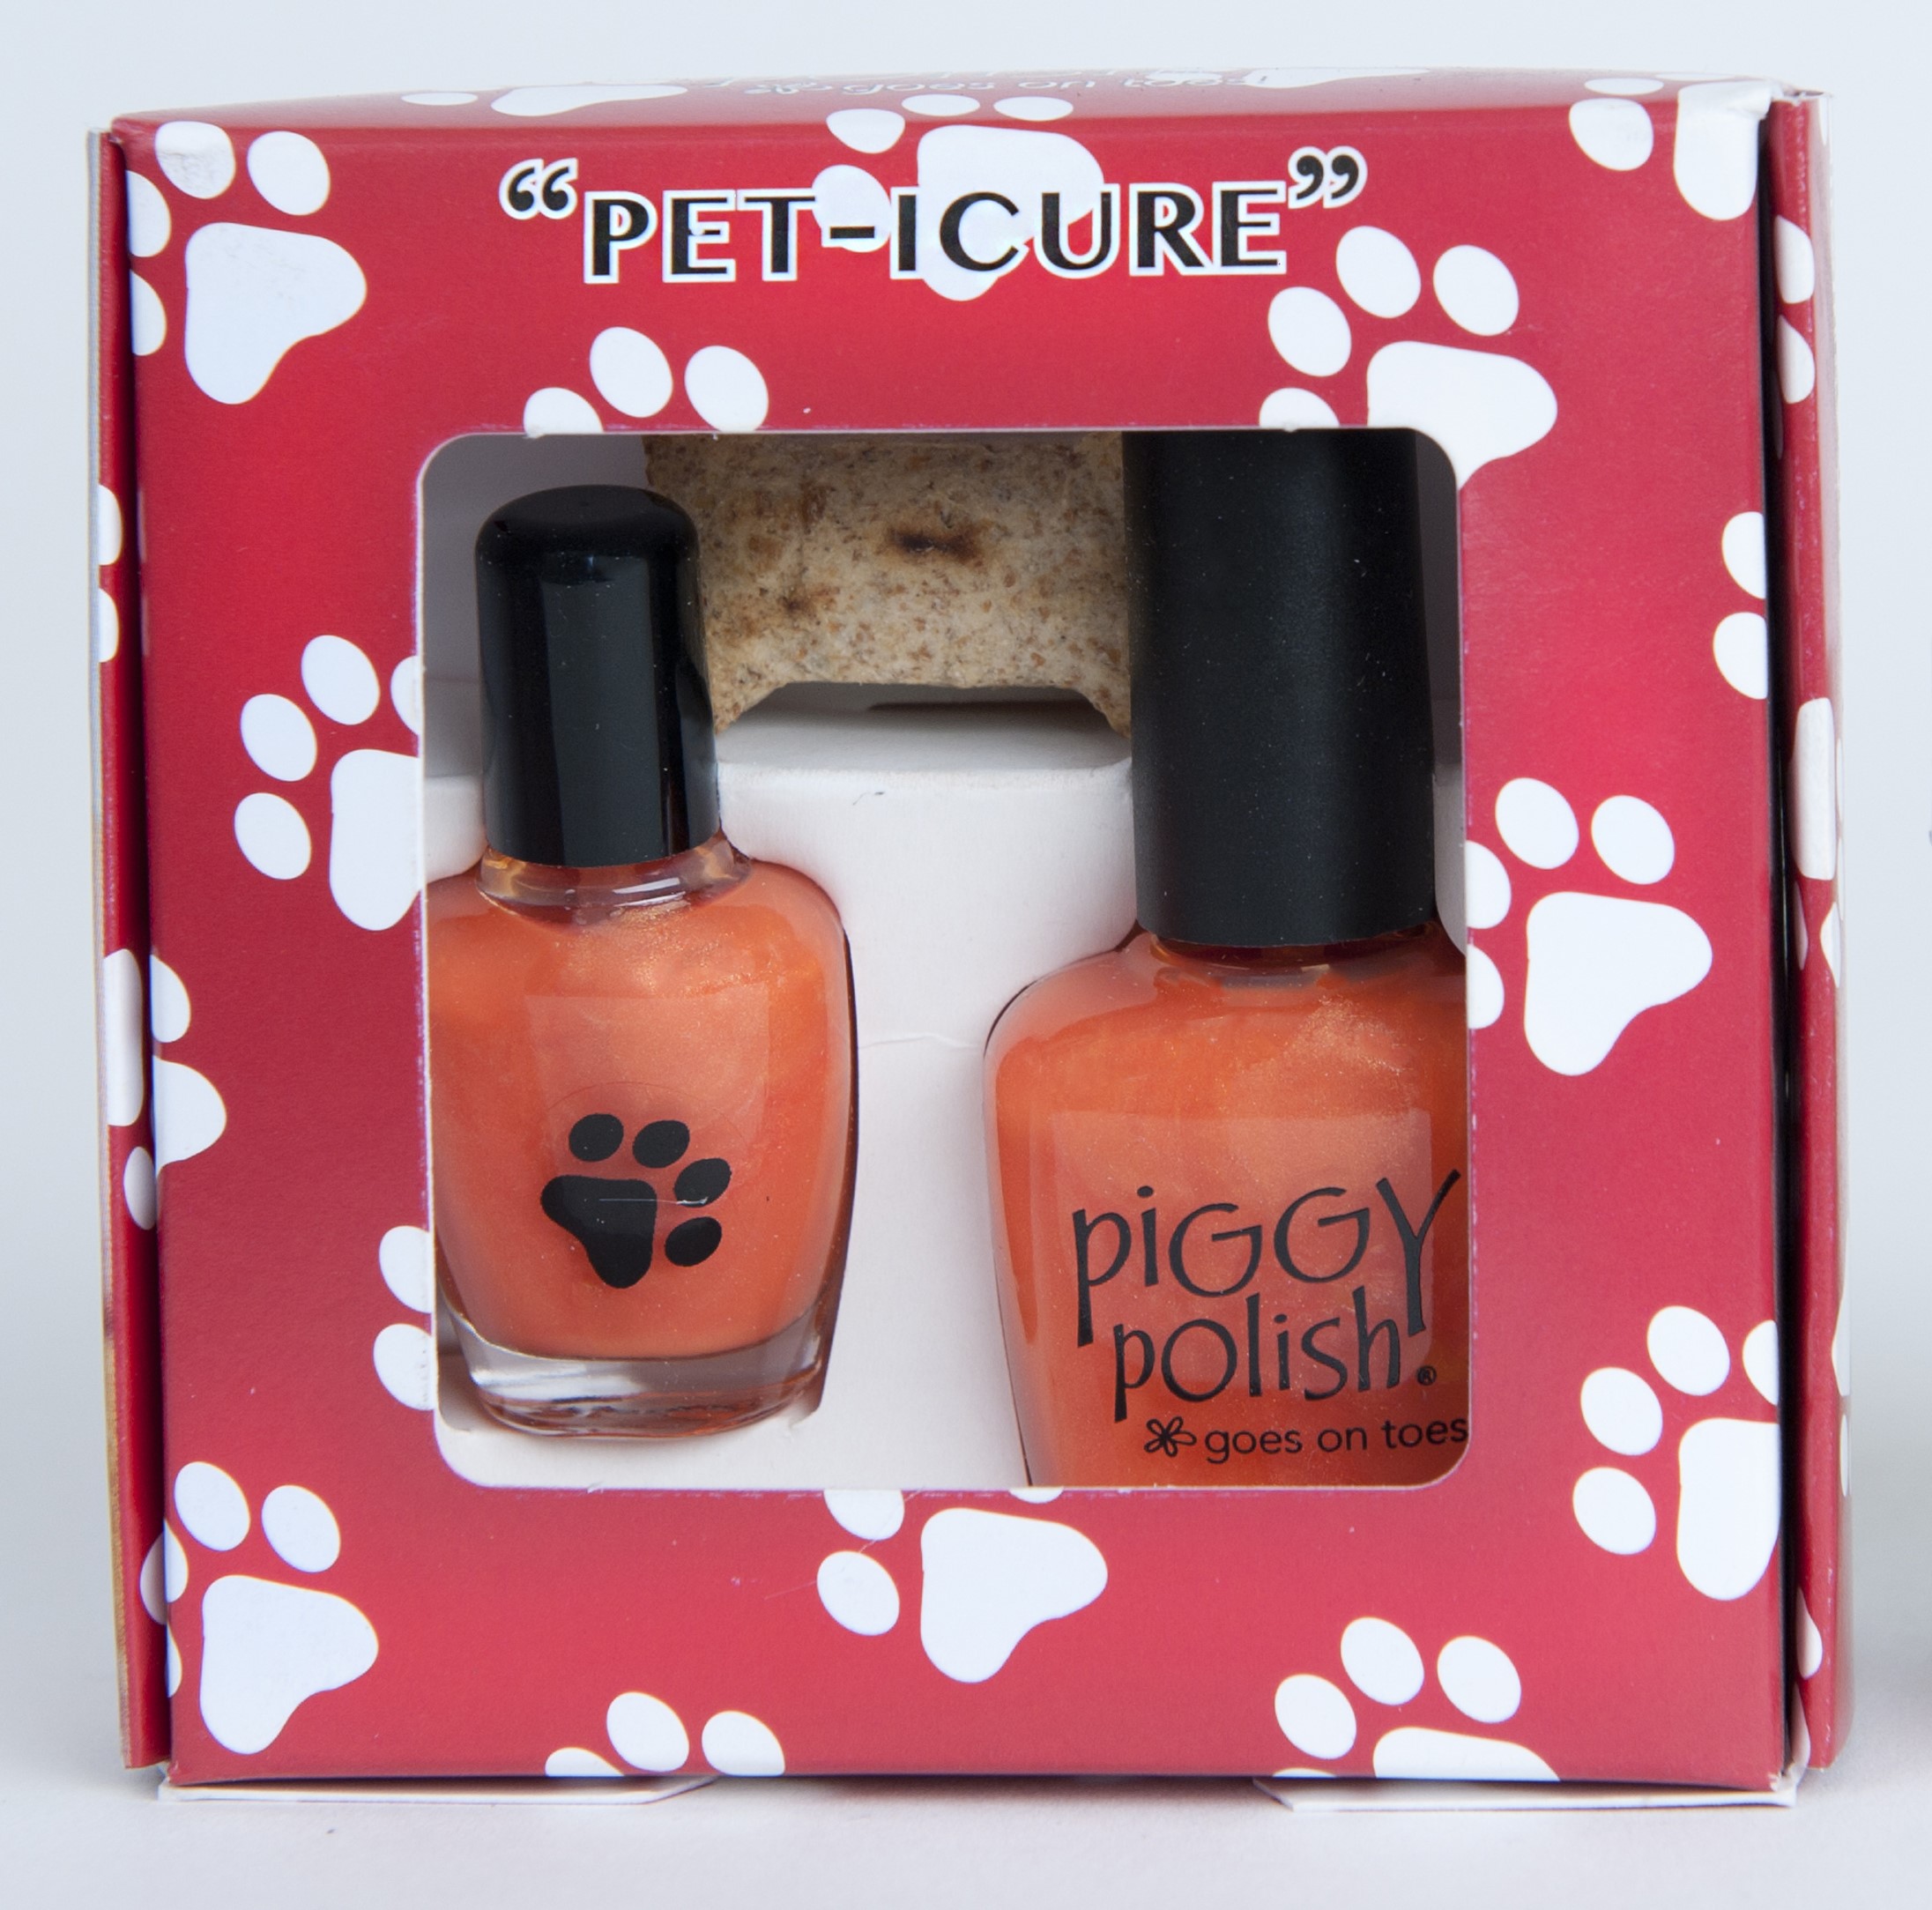 Pet-icure Dog Nail Polish - Piggy Polish